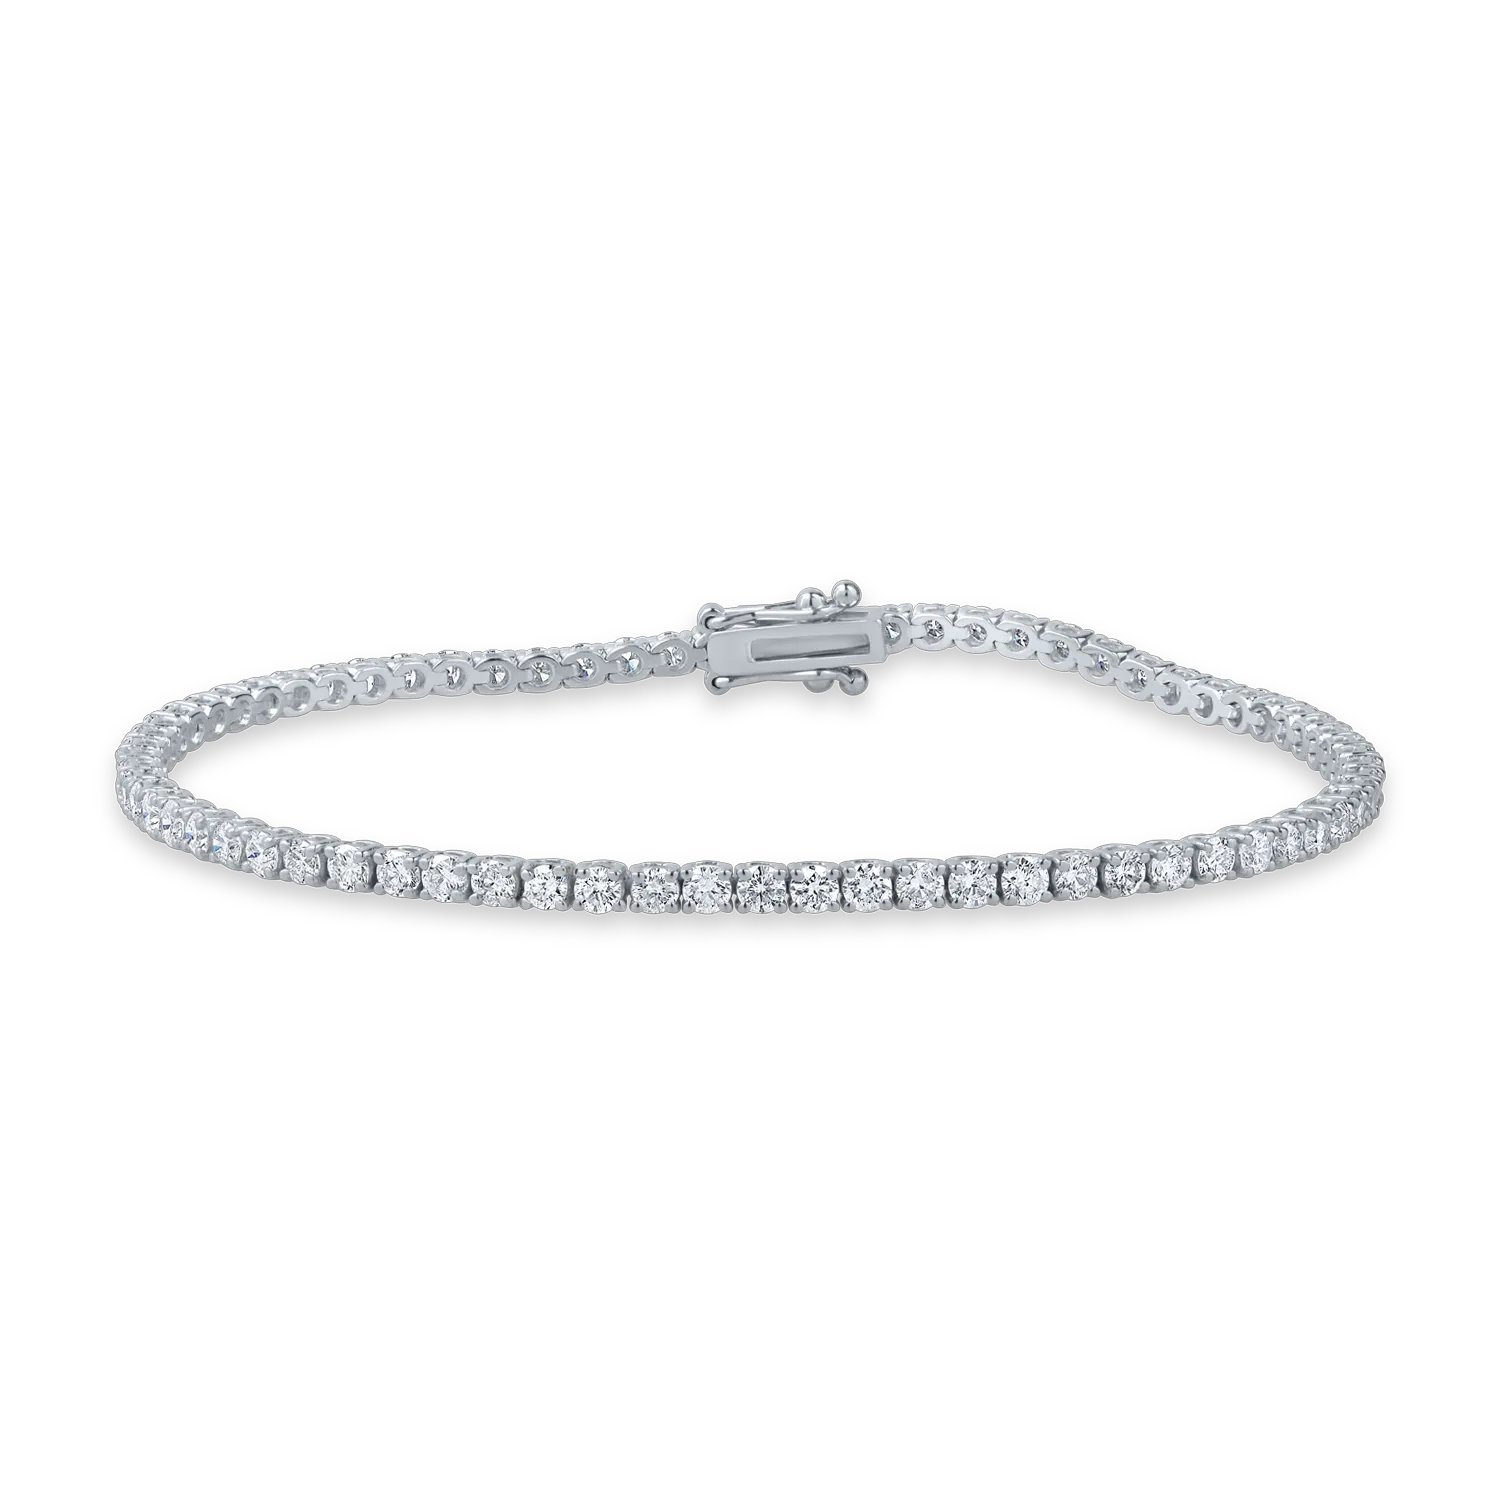 White gold tennis bracelet with 3ct diamonds